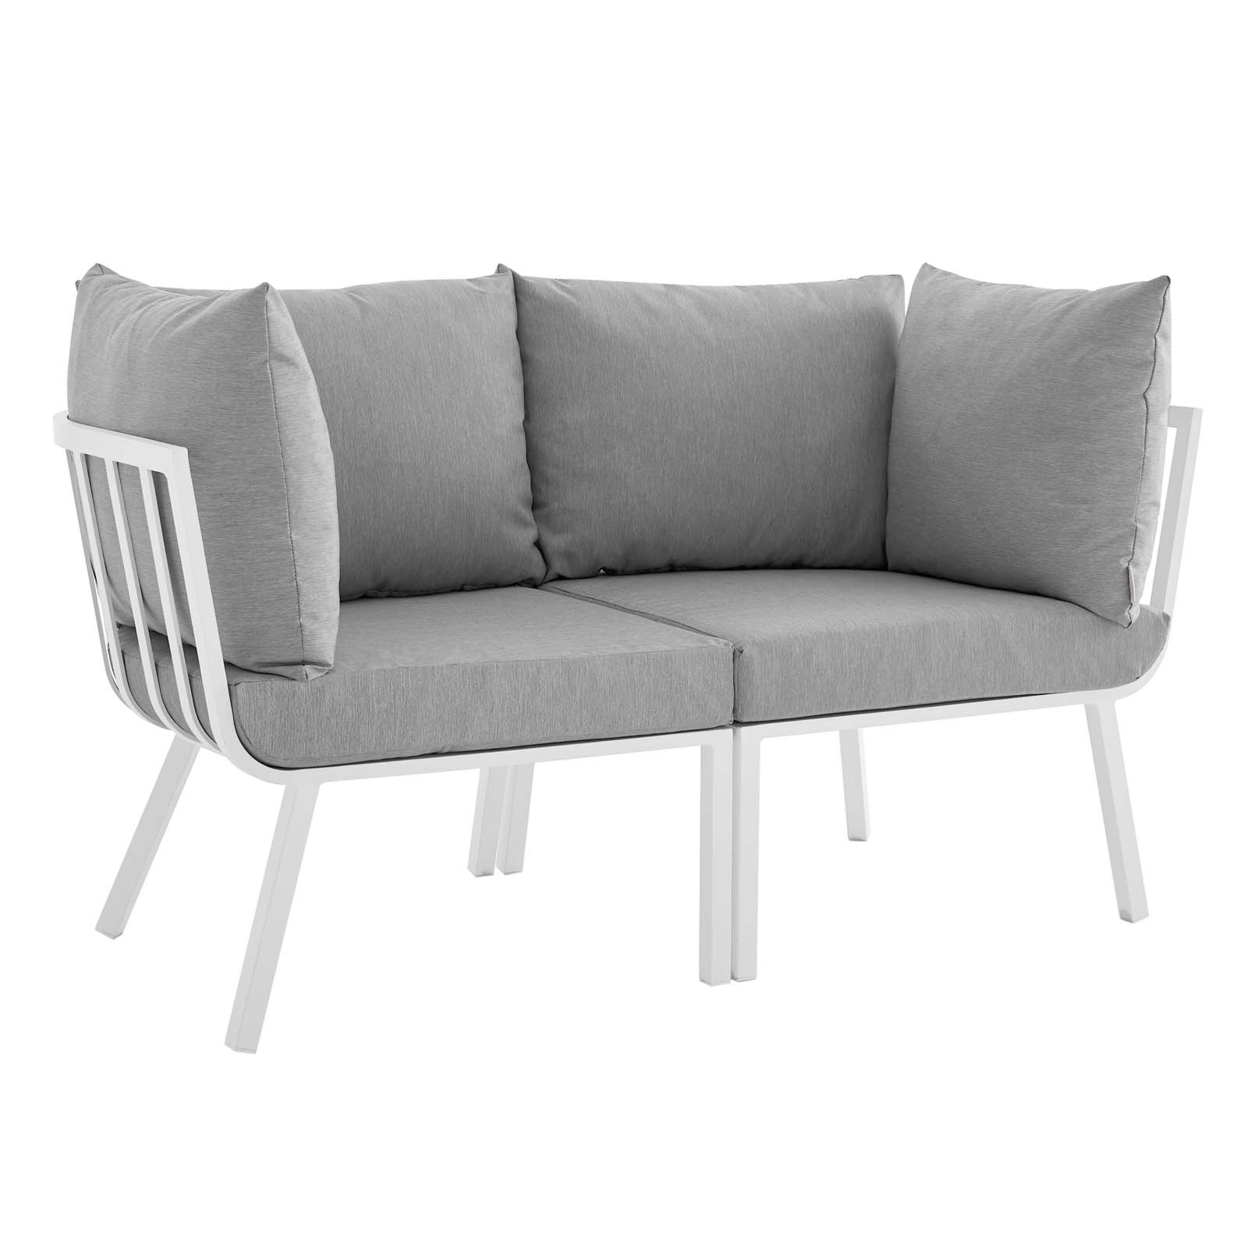 Riverside 2 Piece Outdoor Patio Aluminum Sectional Sofa Set, White Gray